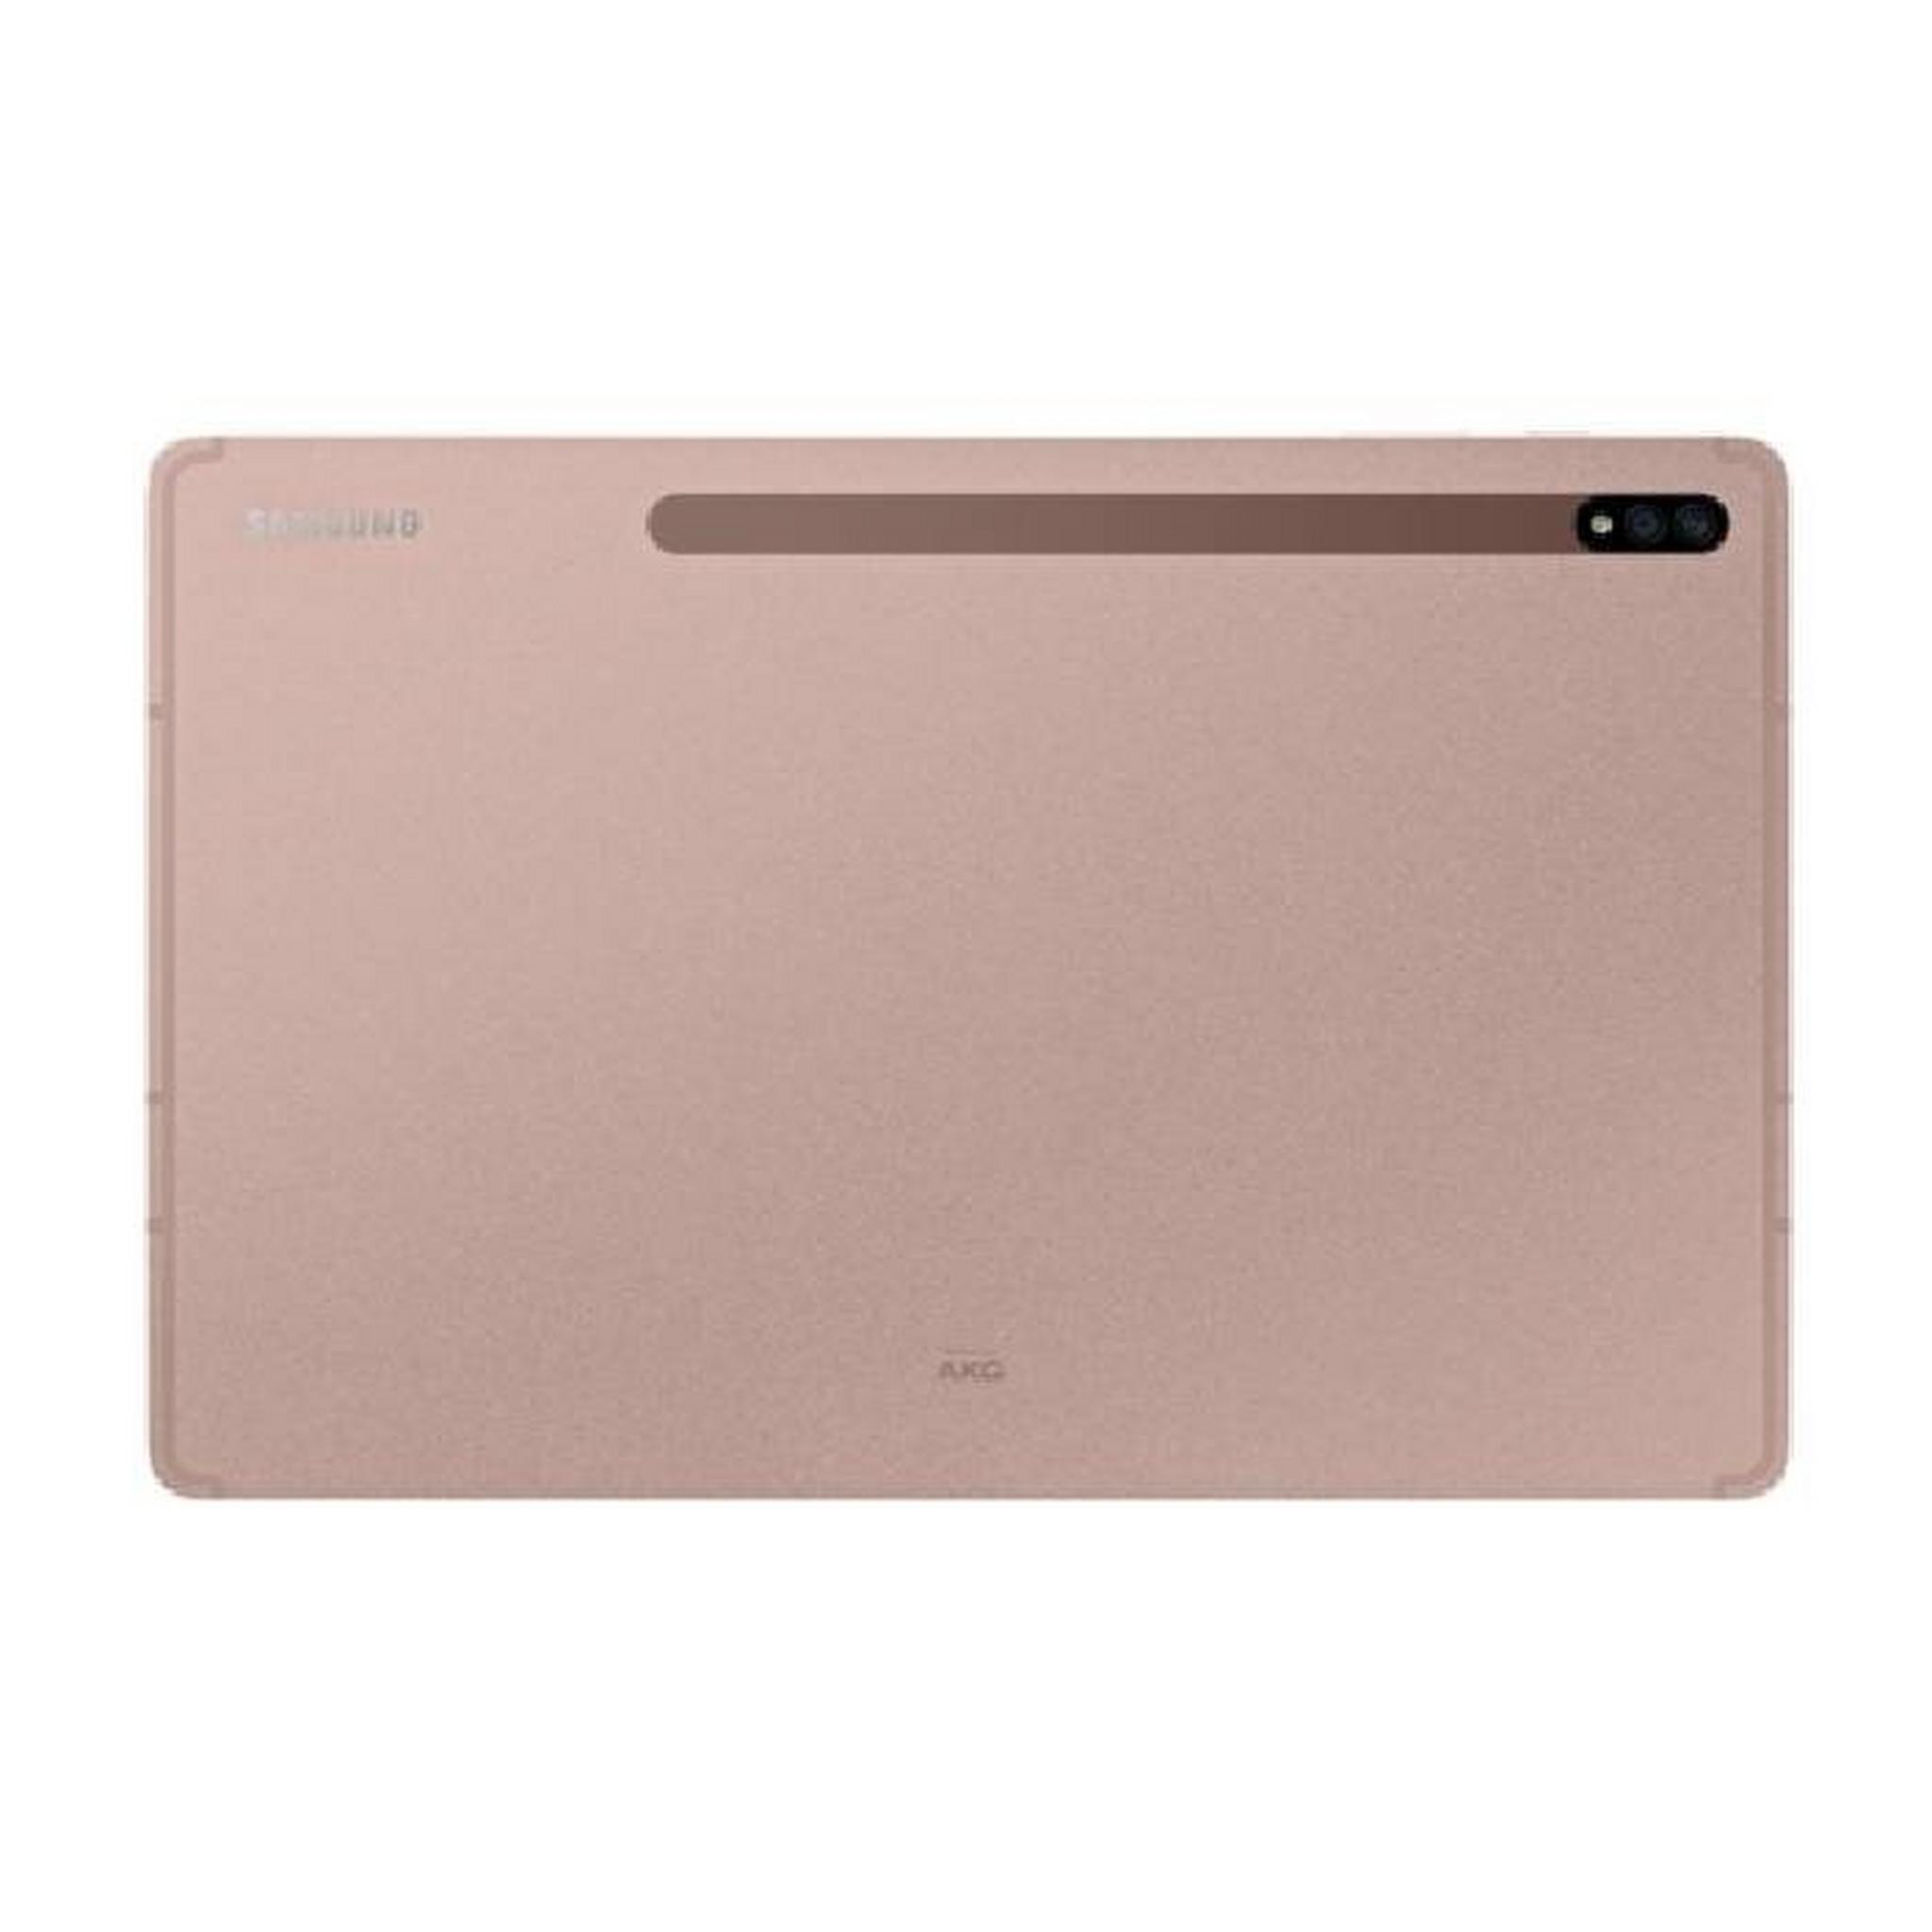 Samsung Galaxy Tab S7 Plus 256GB Tablet – Bronze